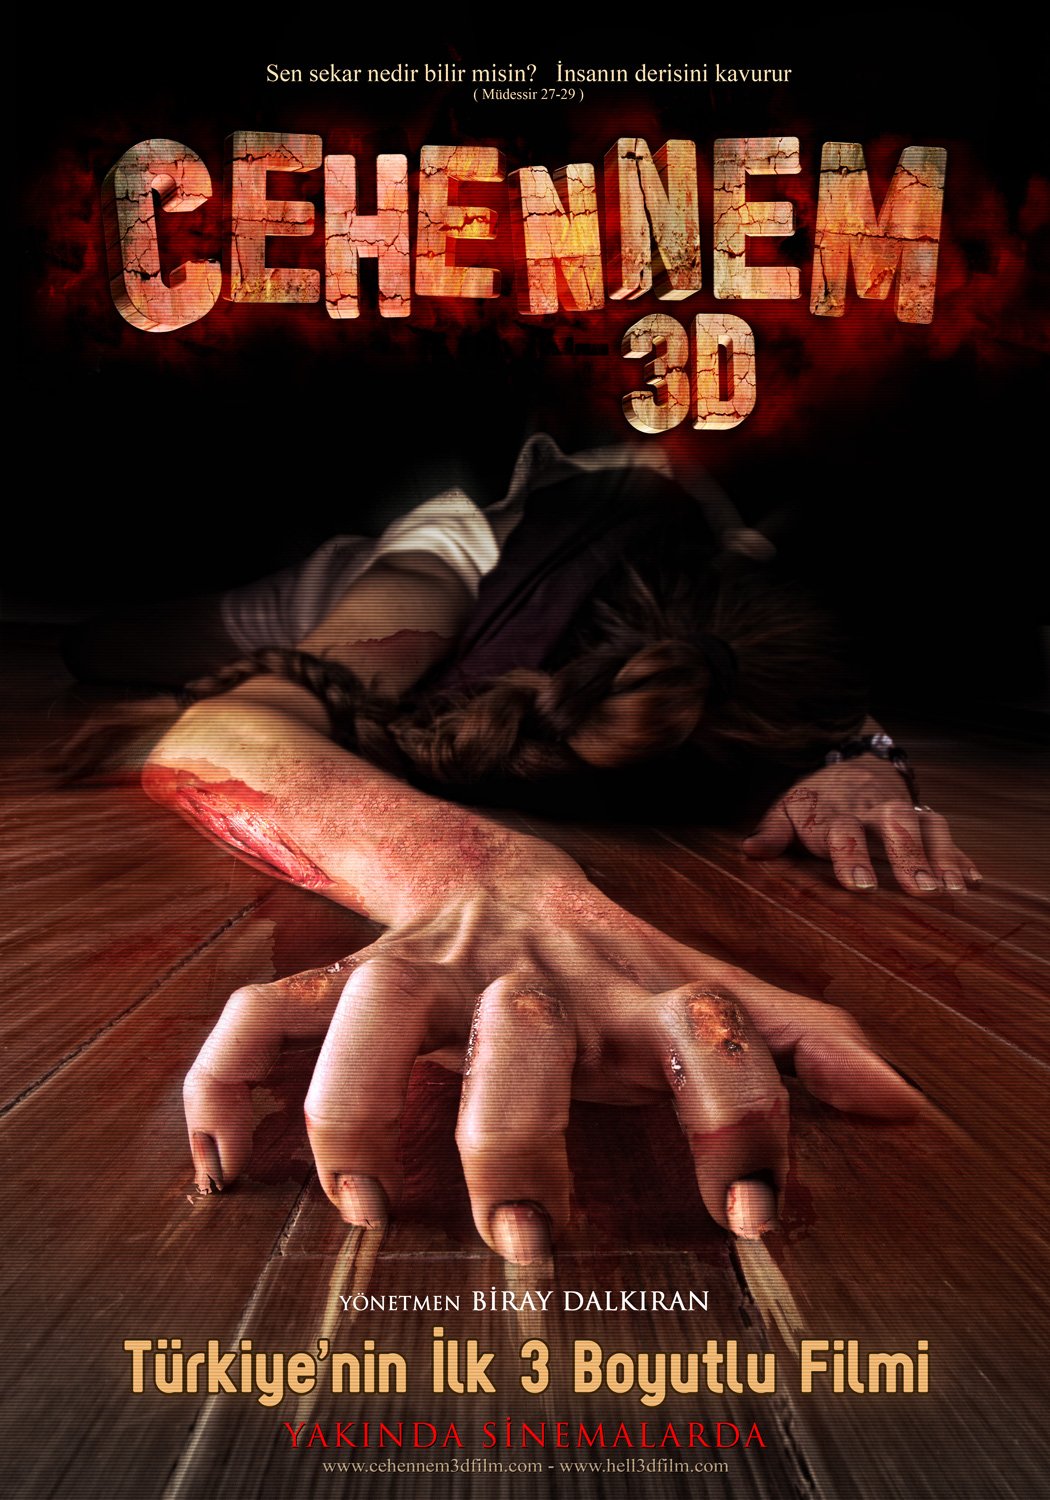 Extra Large Movie Poster Image for Cehennem 3D 